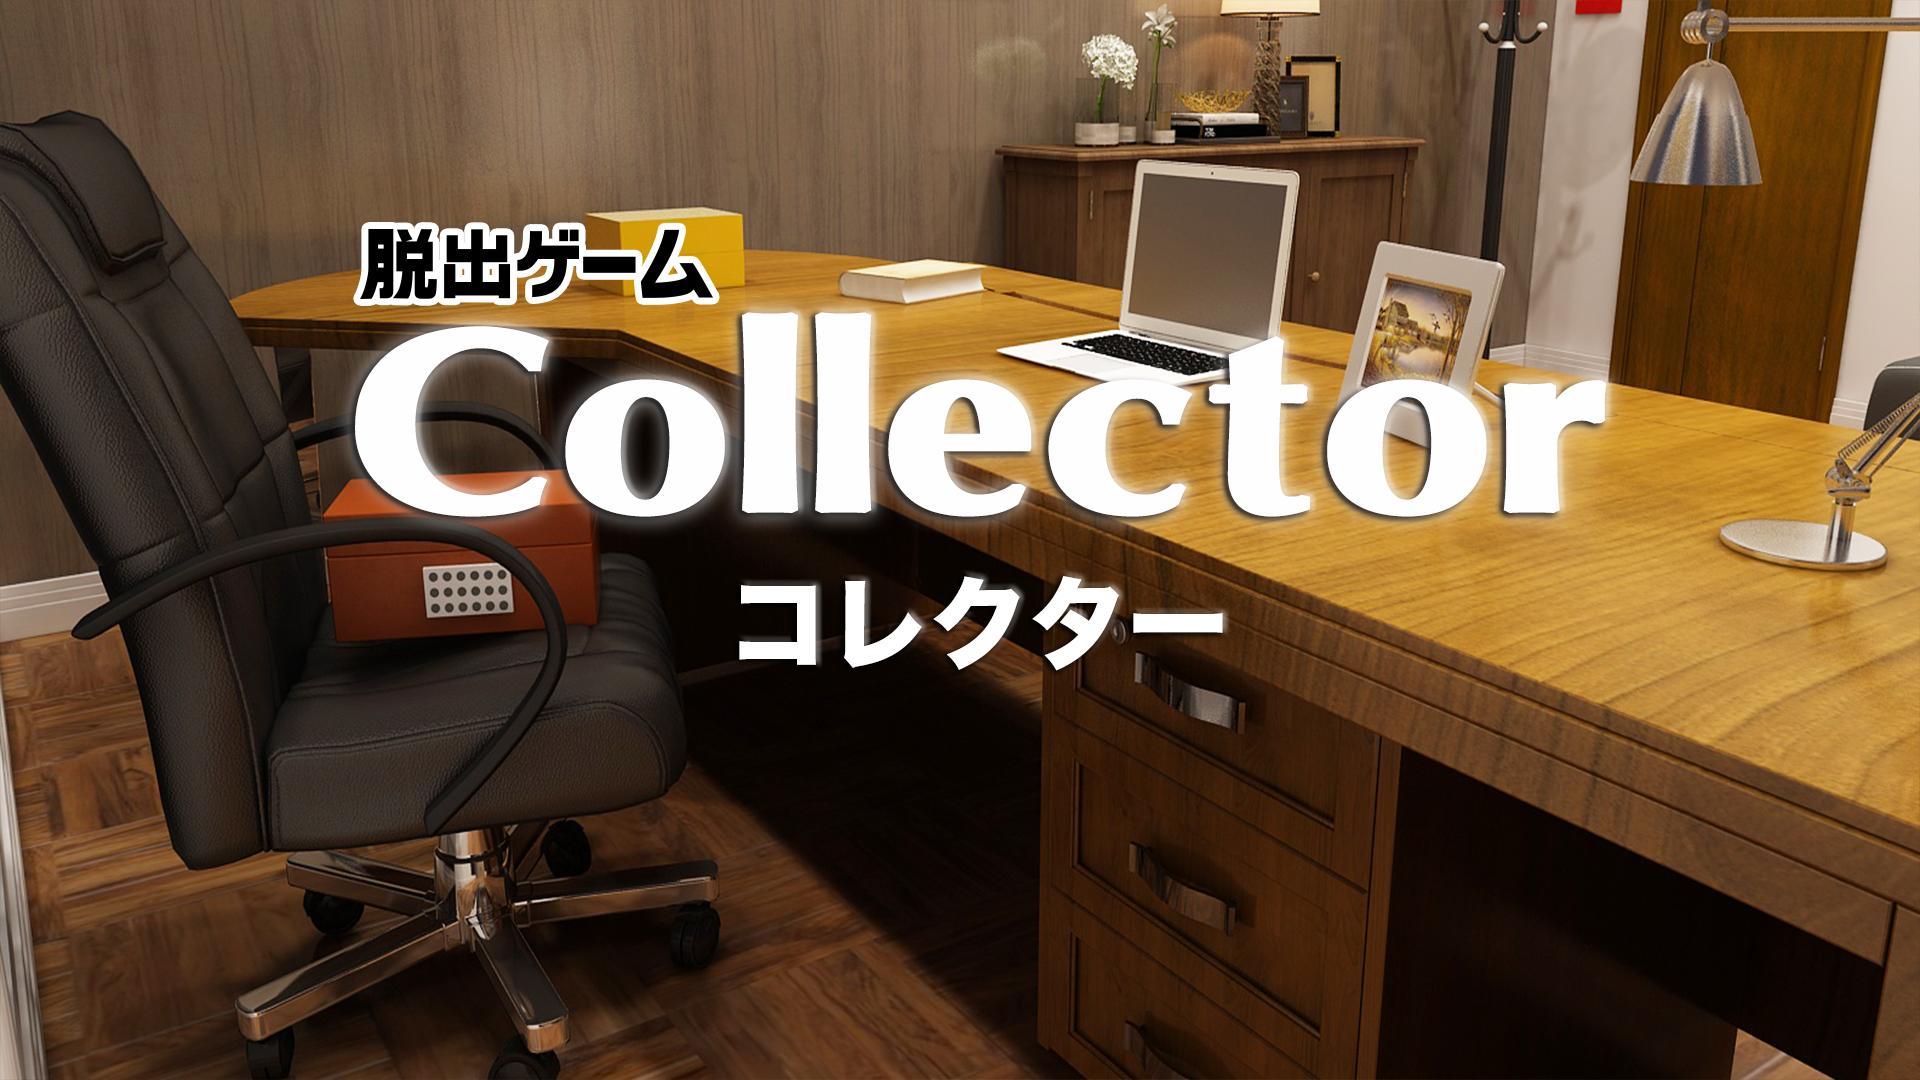 Escape the collector游戏截图